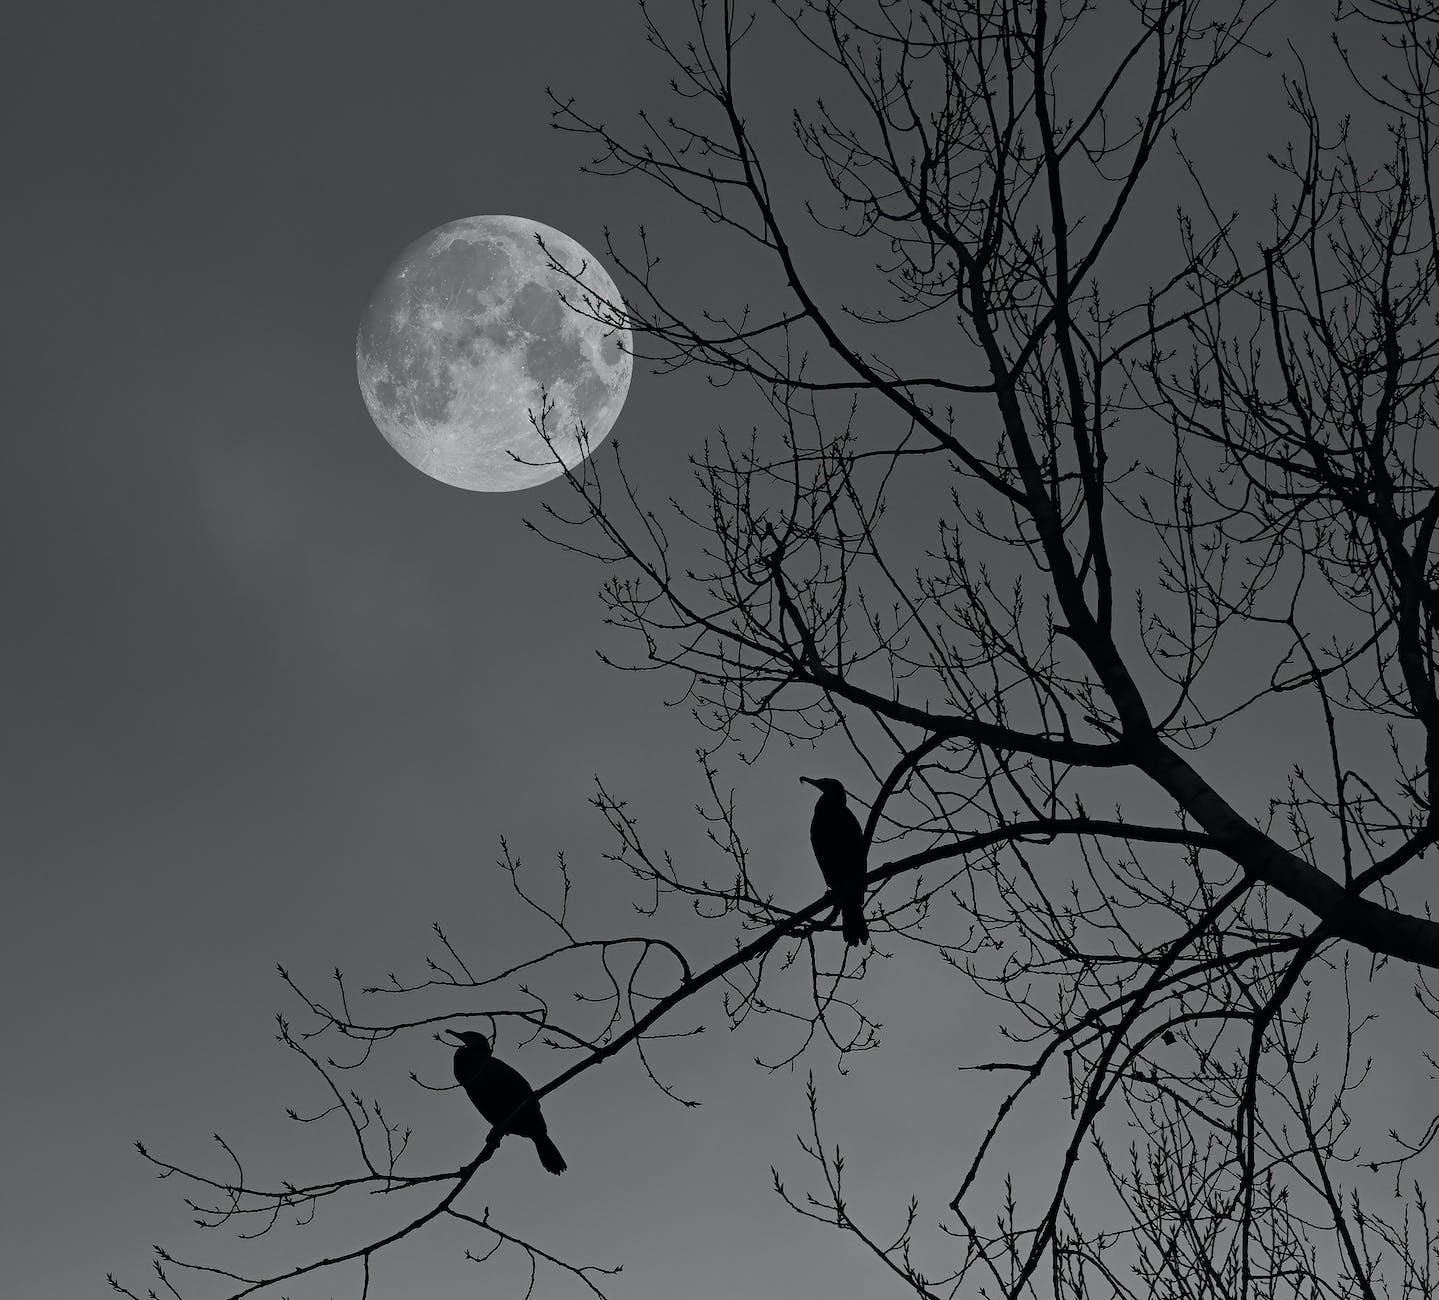 full moon over birds silhouettes on tree